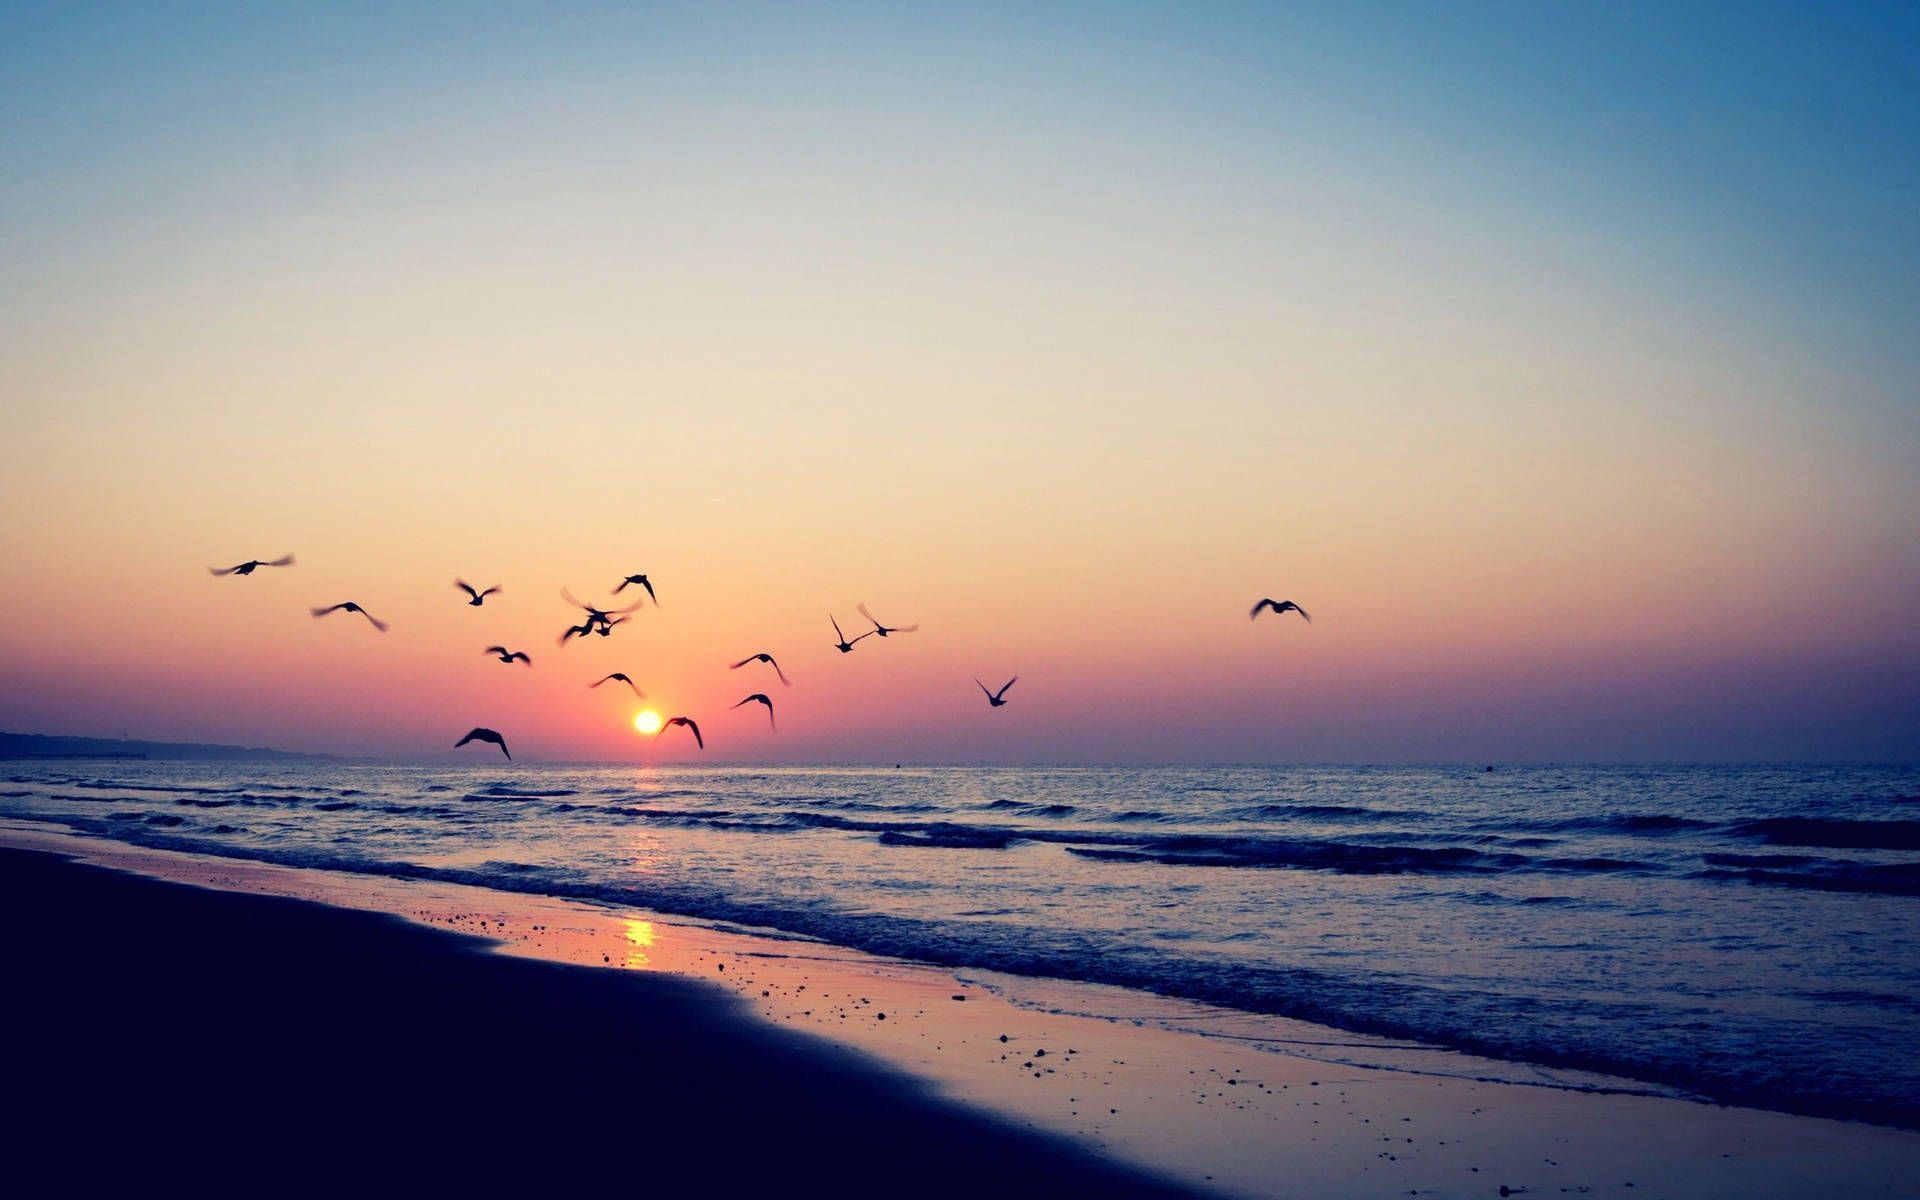 A flock of birds flying over the ocean during sunset. - Summer, sunset